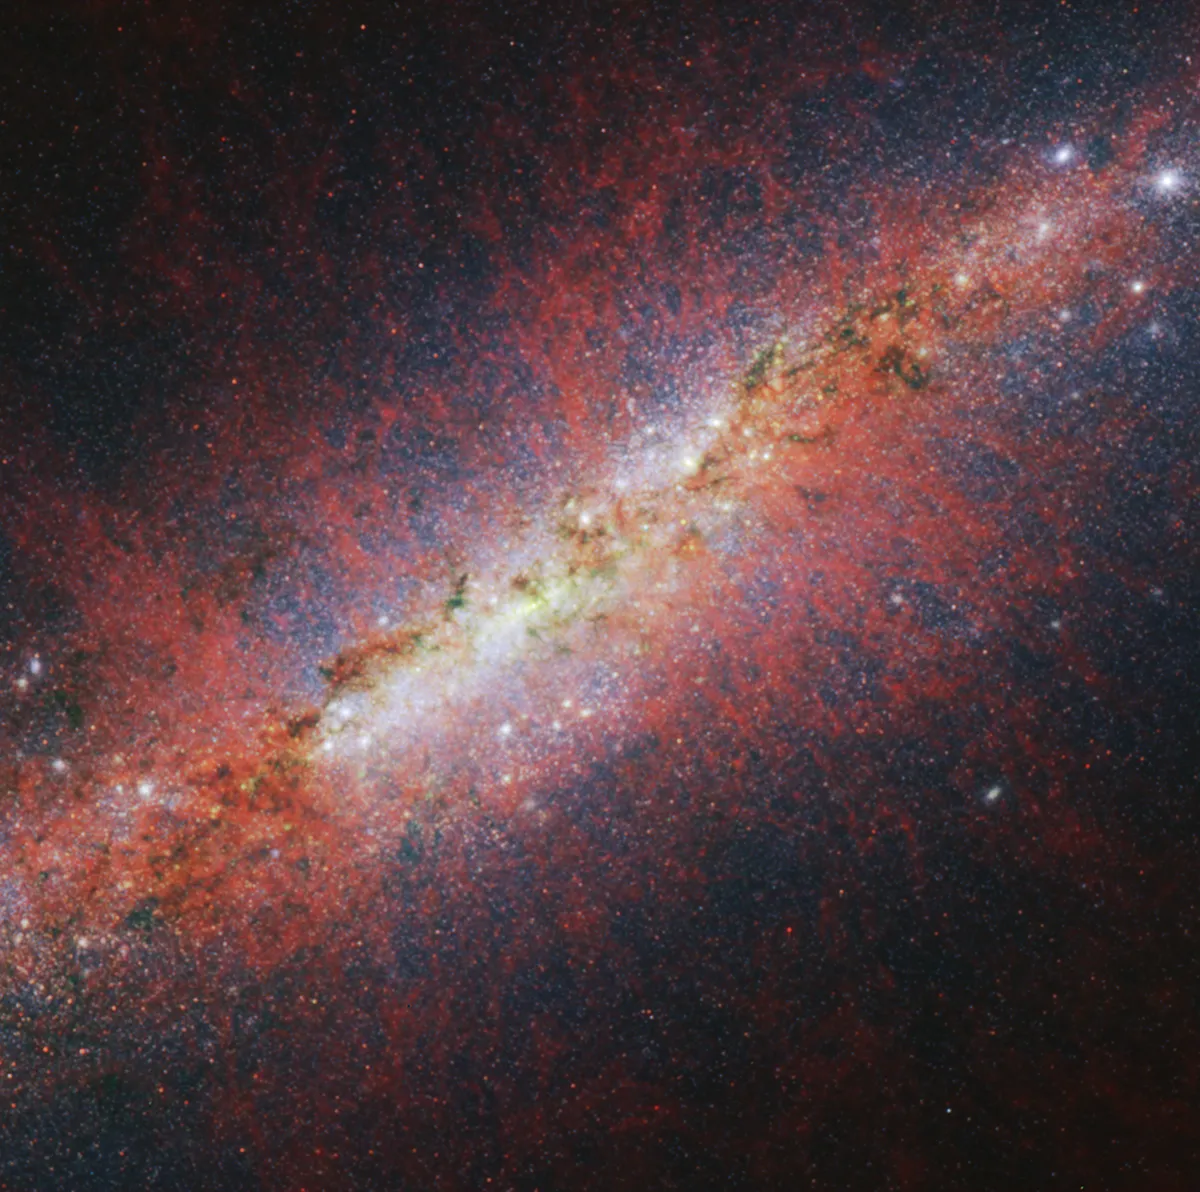 Image of galaxy M82 captured by the James Webb Space Telescope. Credit: NASA, ESA, CSA, STScI, Alberto Bolatto (UMD)